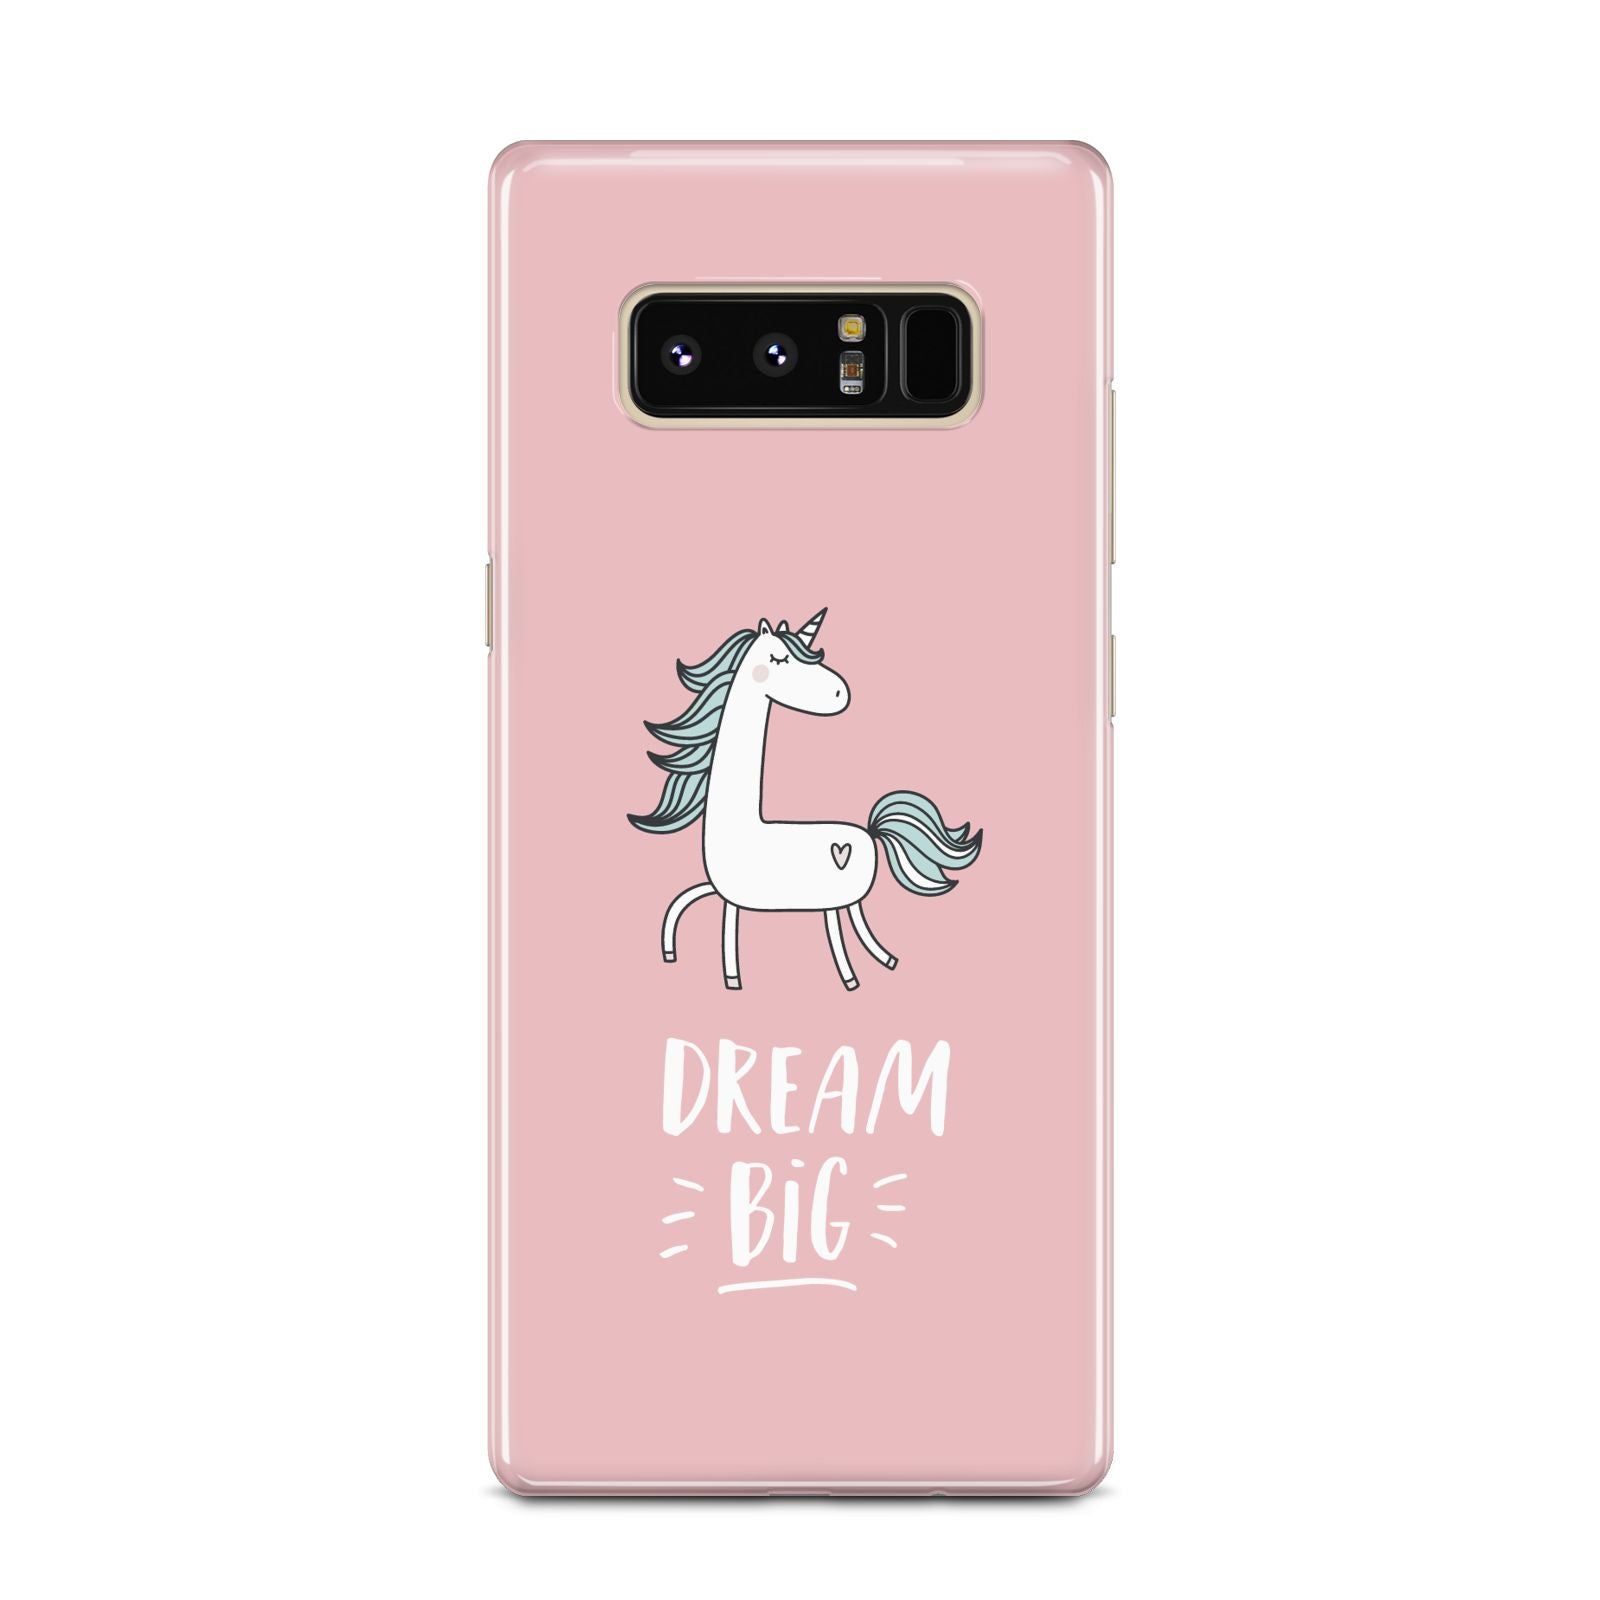 Unicorn Print Dream Big Samsung Galaxy Note 8 Case